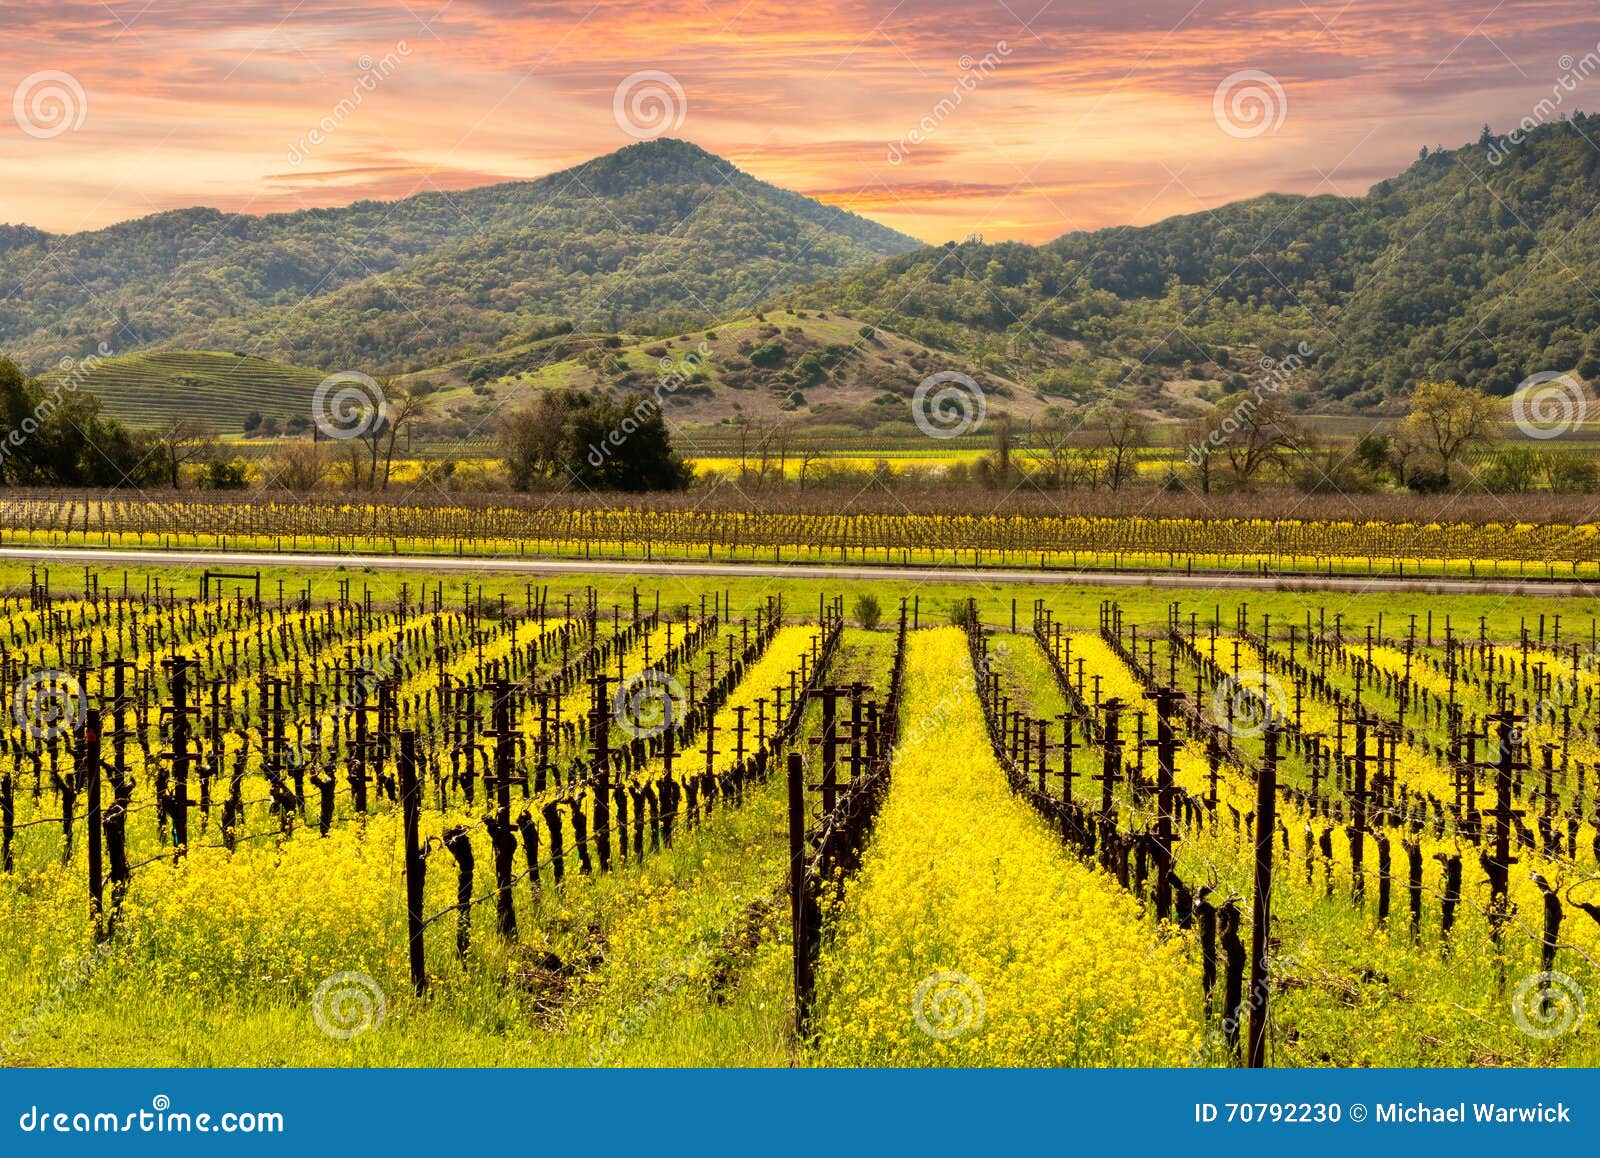 napa valley vineyards sunrise